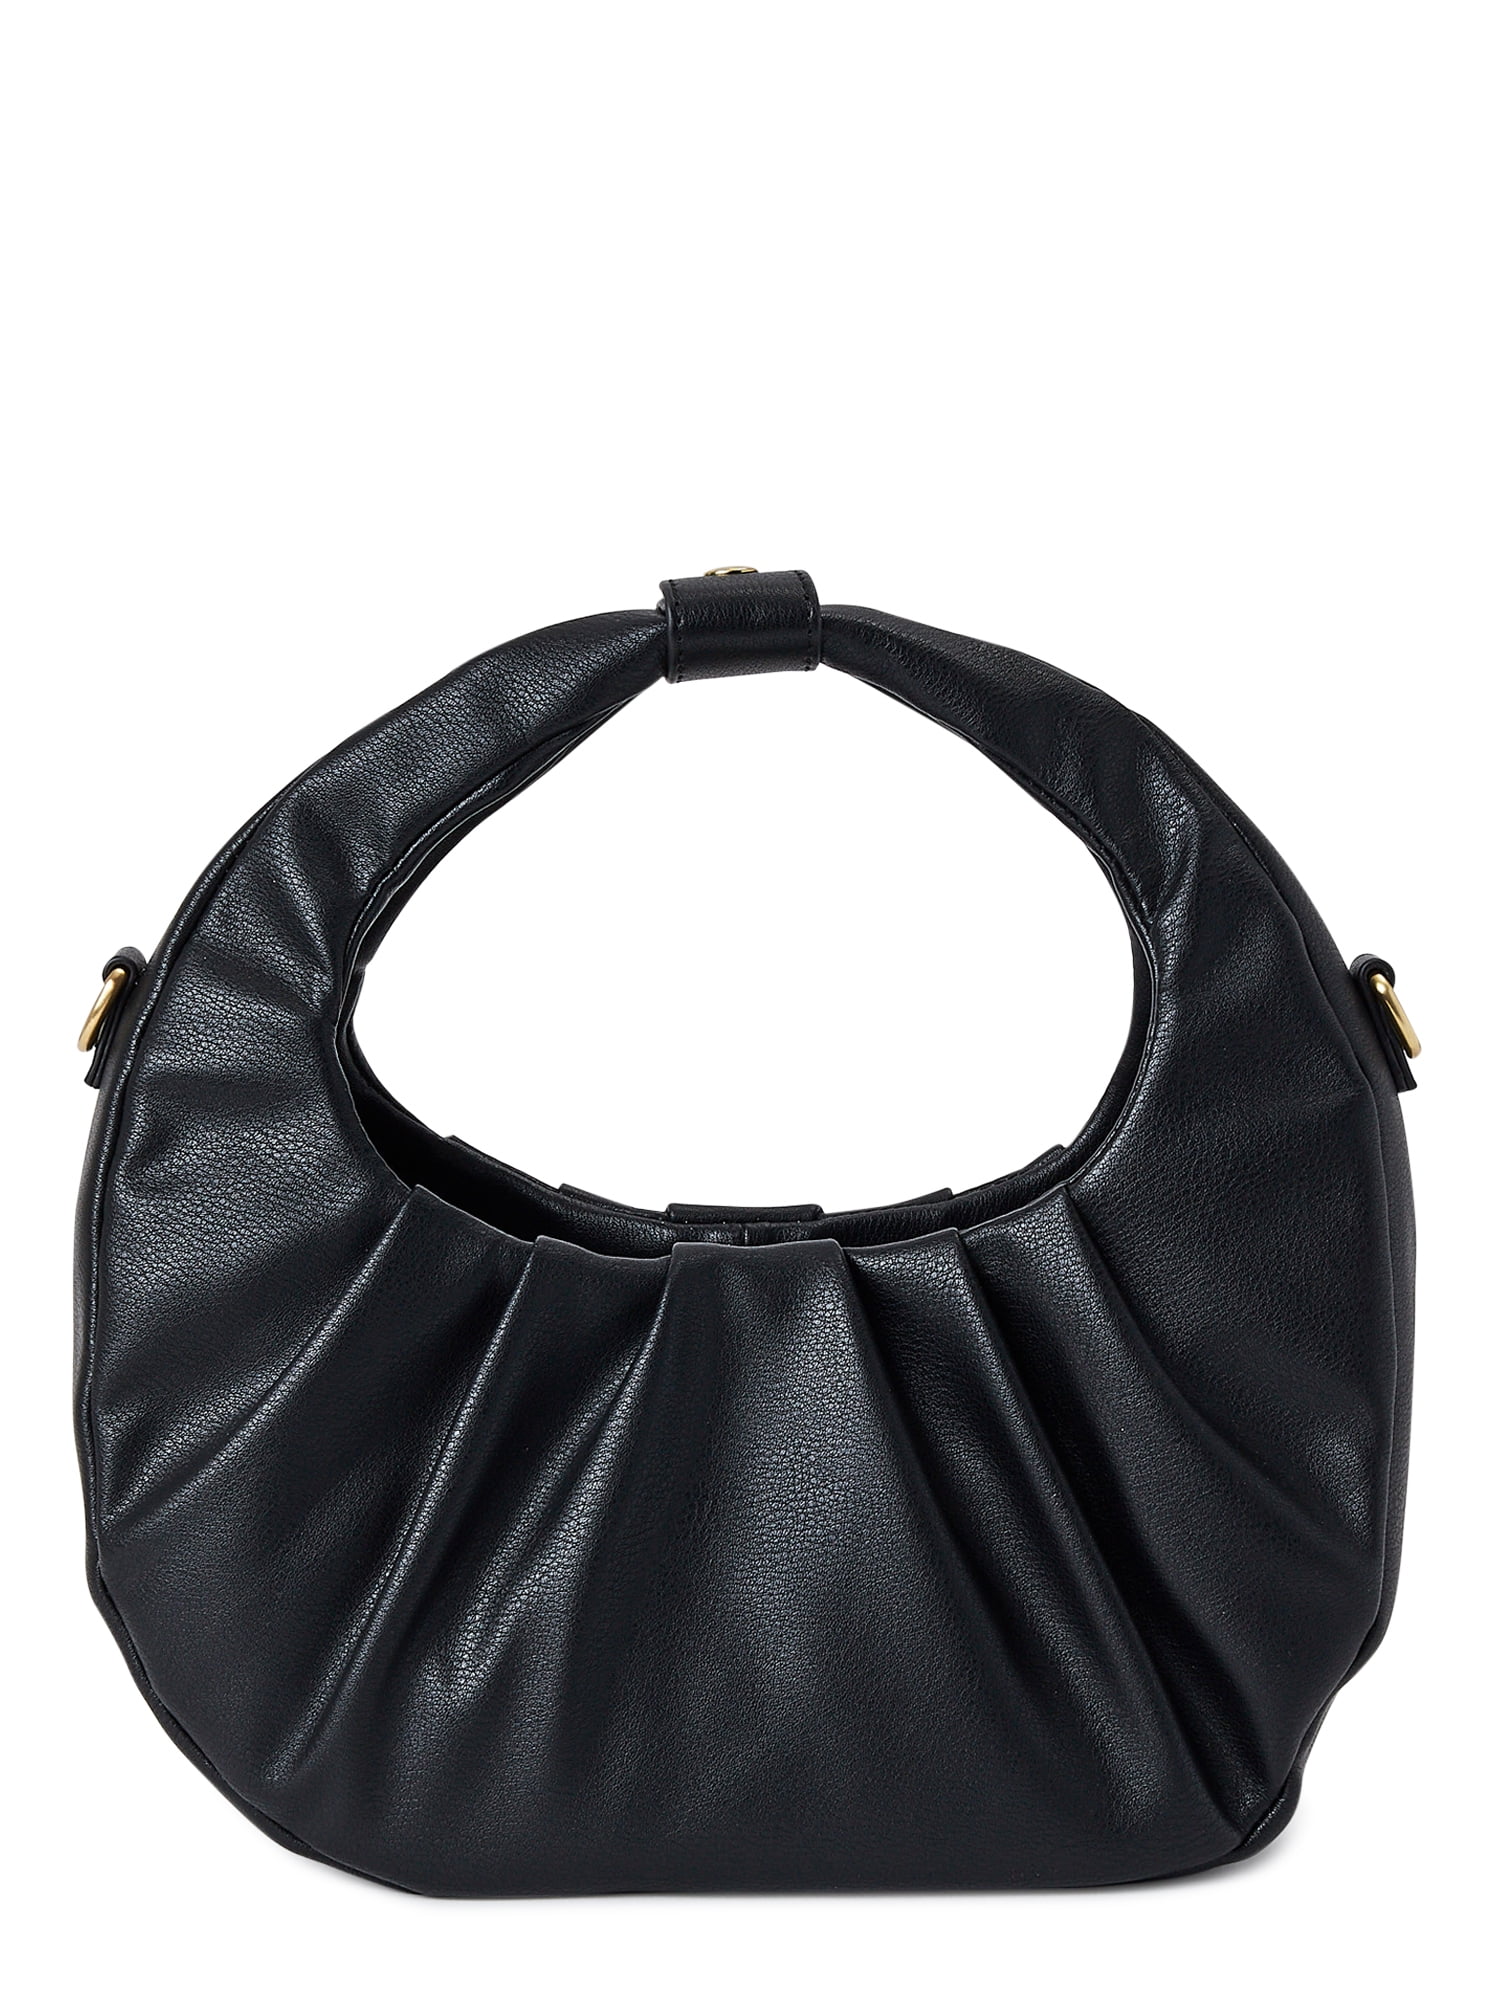 WESTBRONCO Crescent Bag Crossbody Bags for Women Trendy Small Nylon Fanny  Pack Sling Hobo Bag Soft Casual, Black